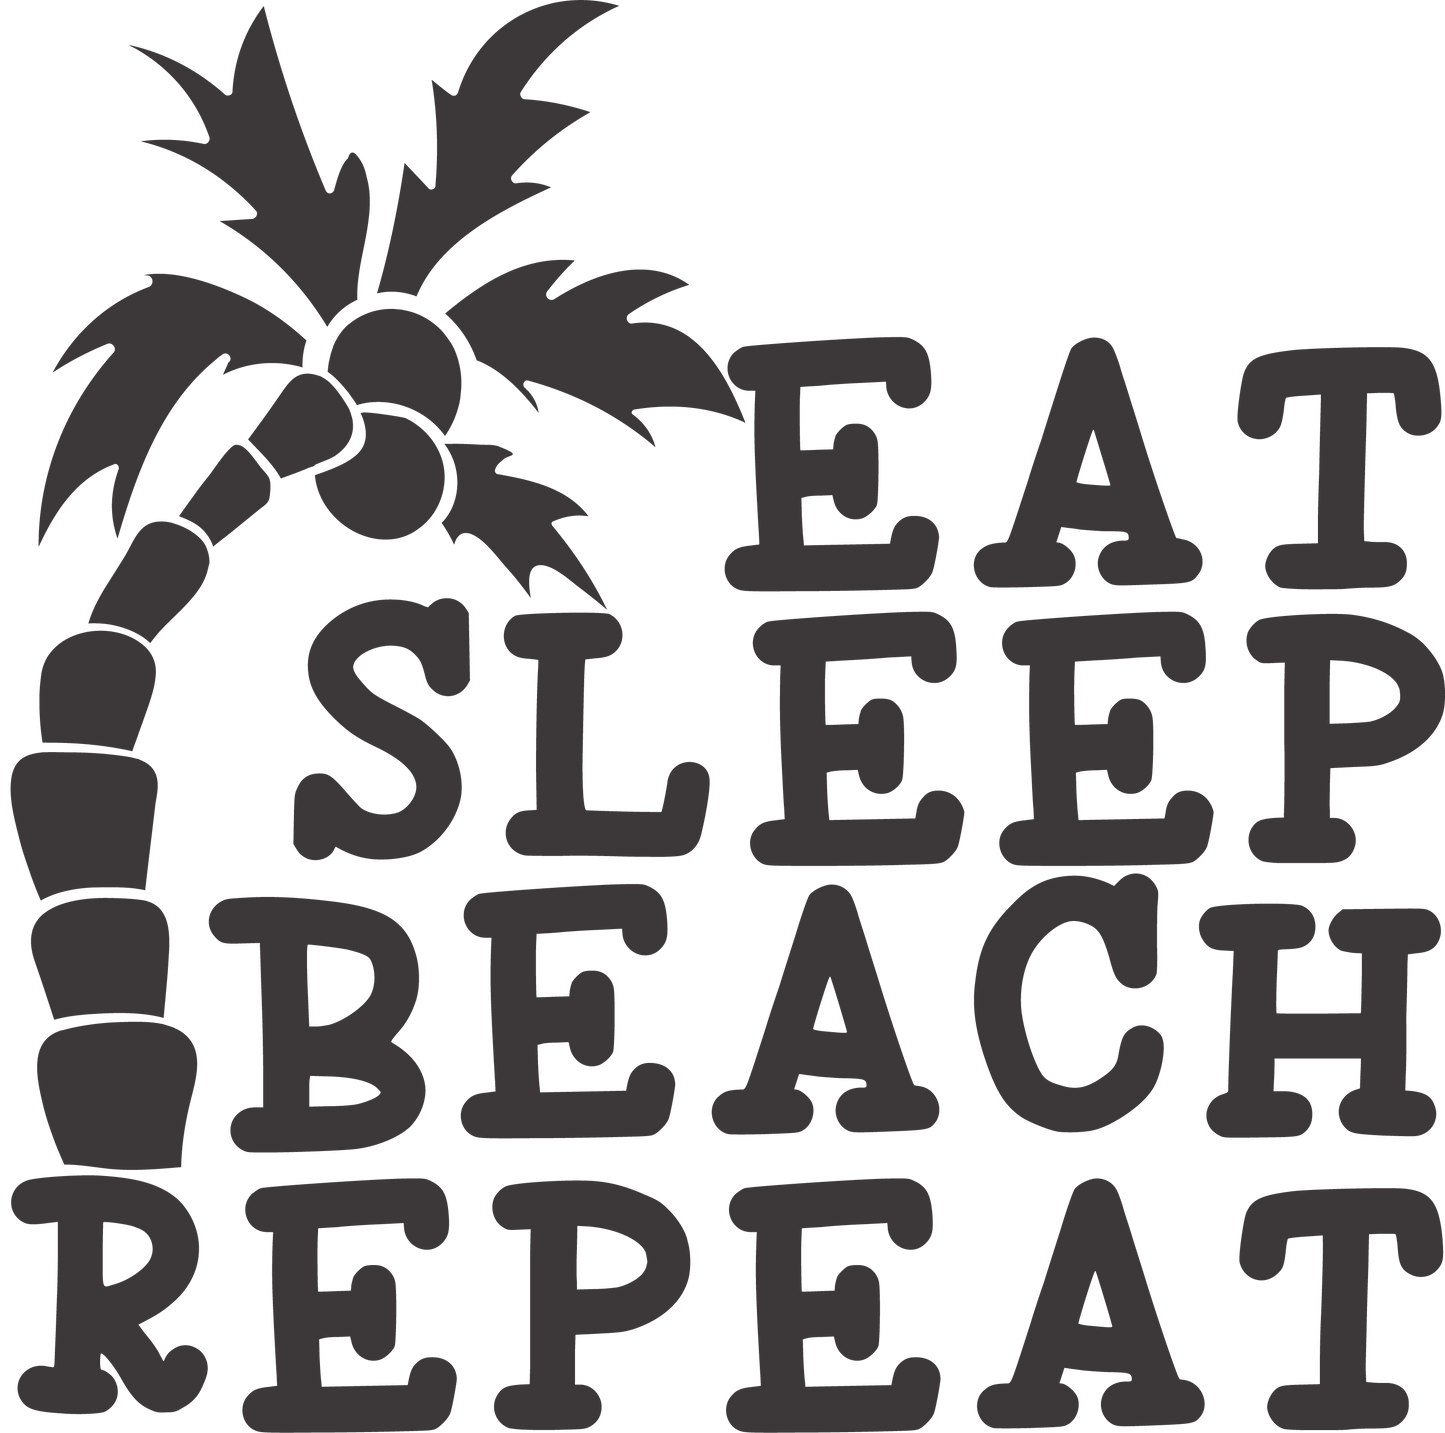 Eat Sleep Beach Repeat Vinyl Graphic for Decals